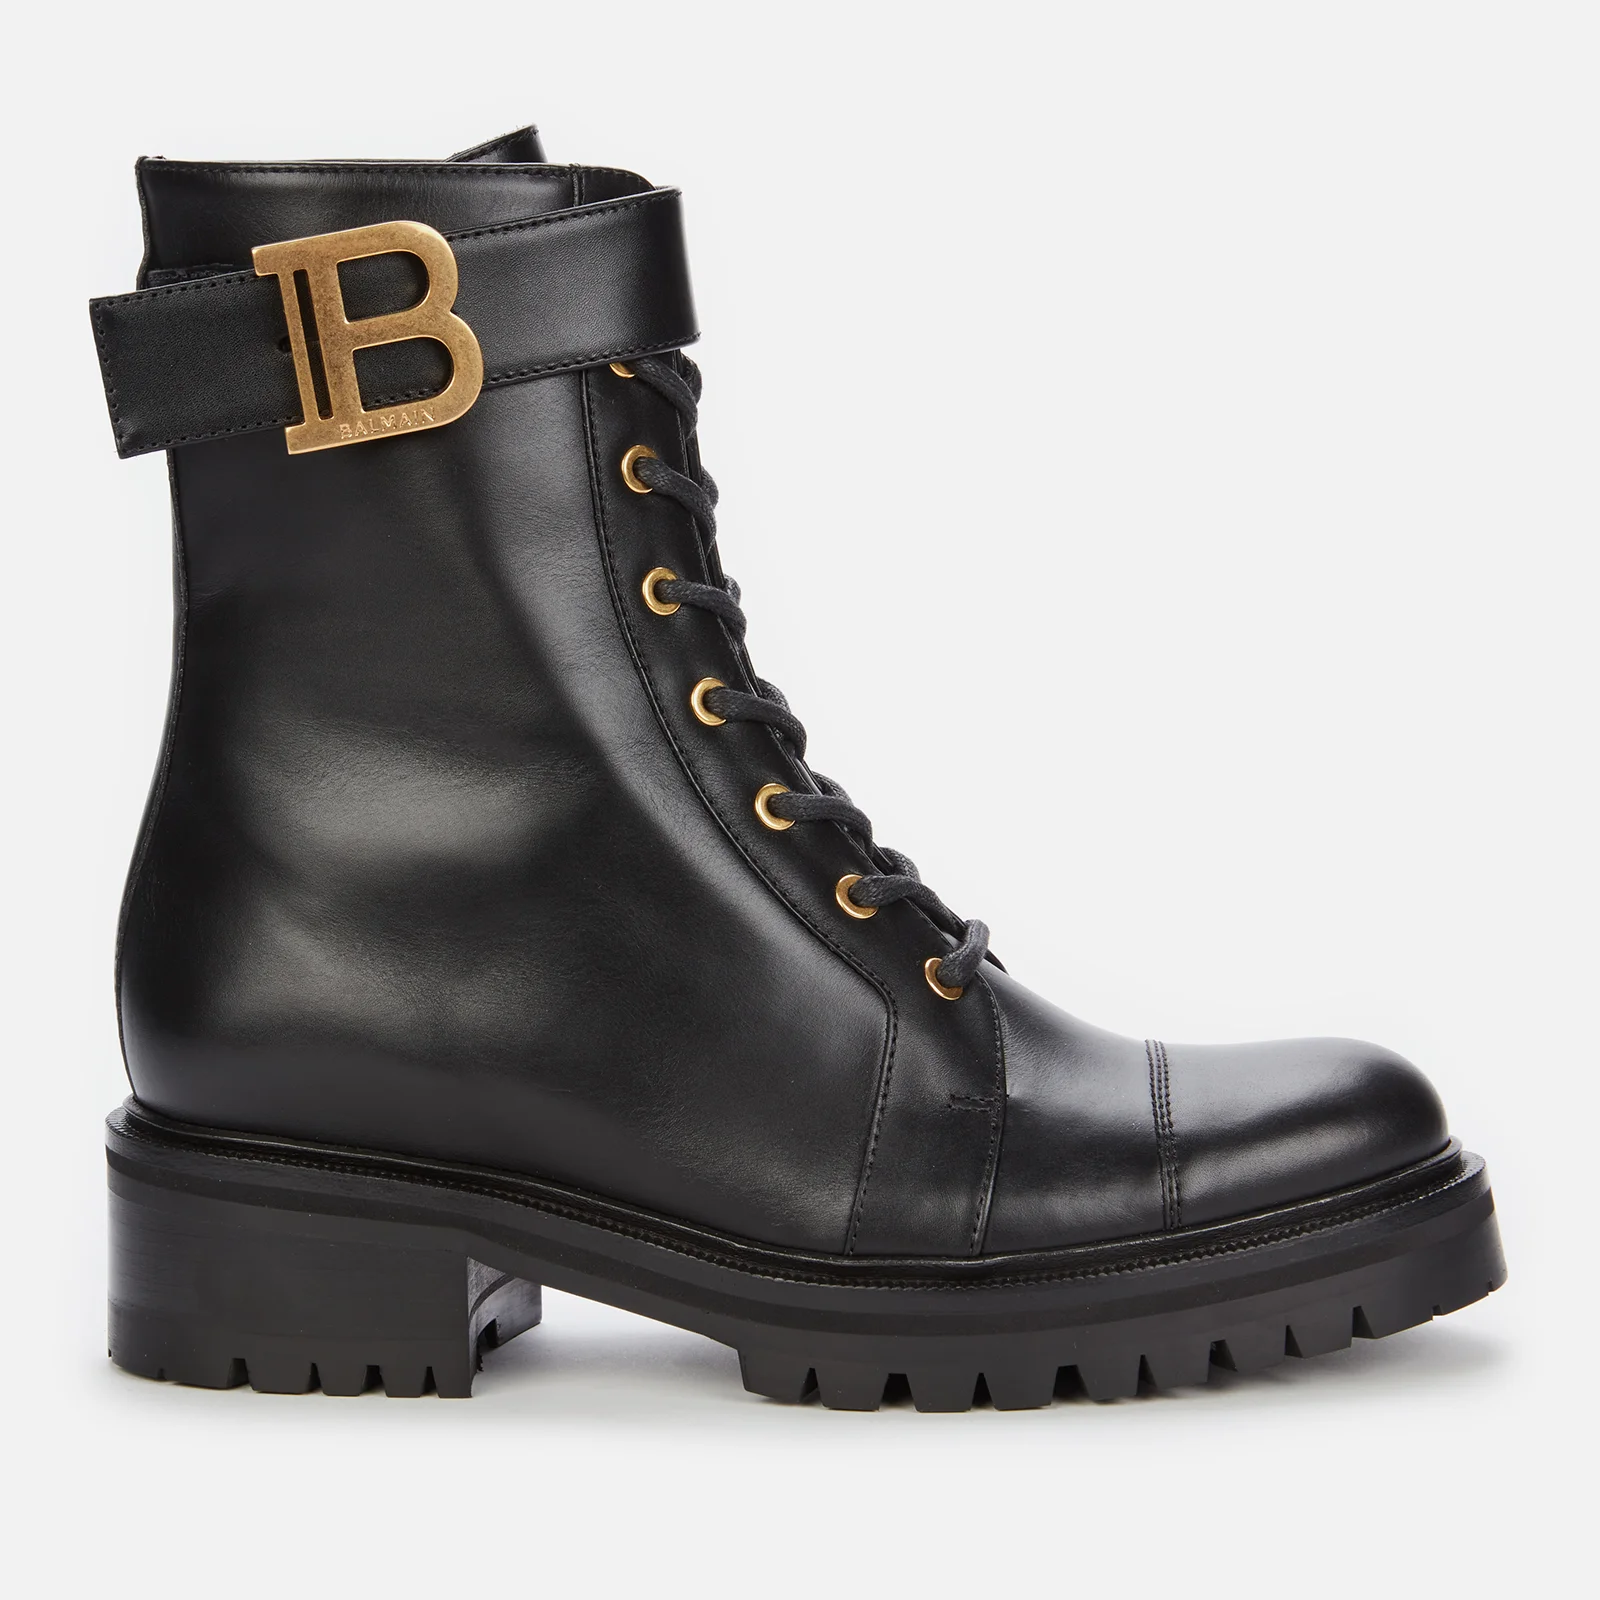 Balmain Women's Ranger Boot Leather - Black Image 1